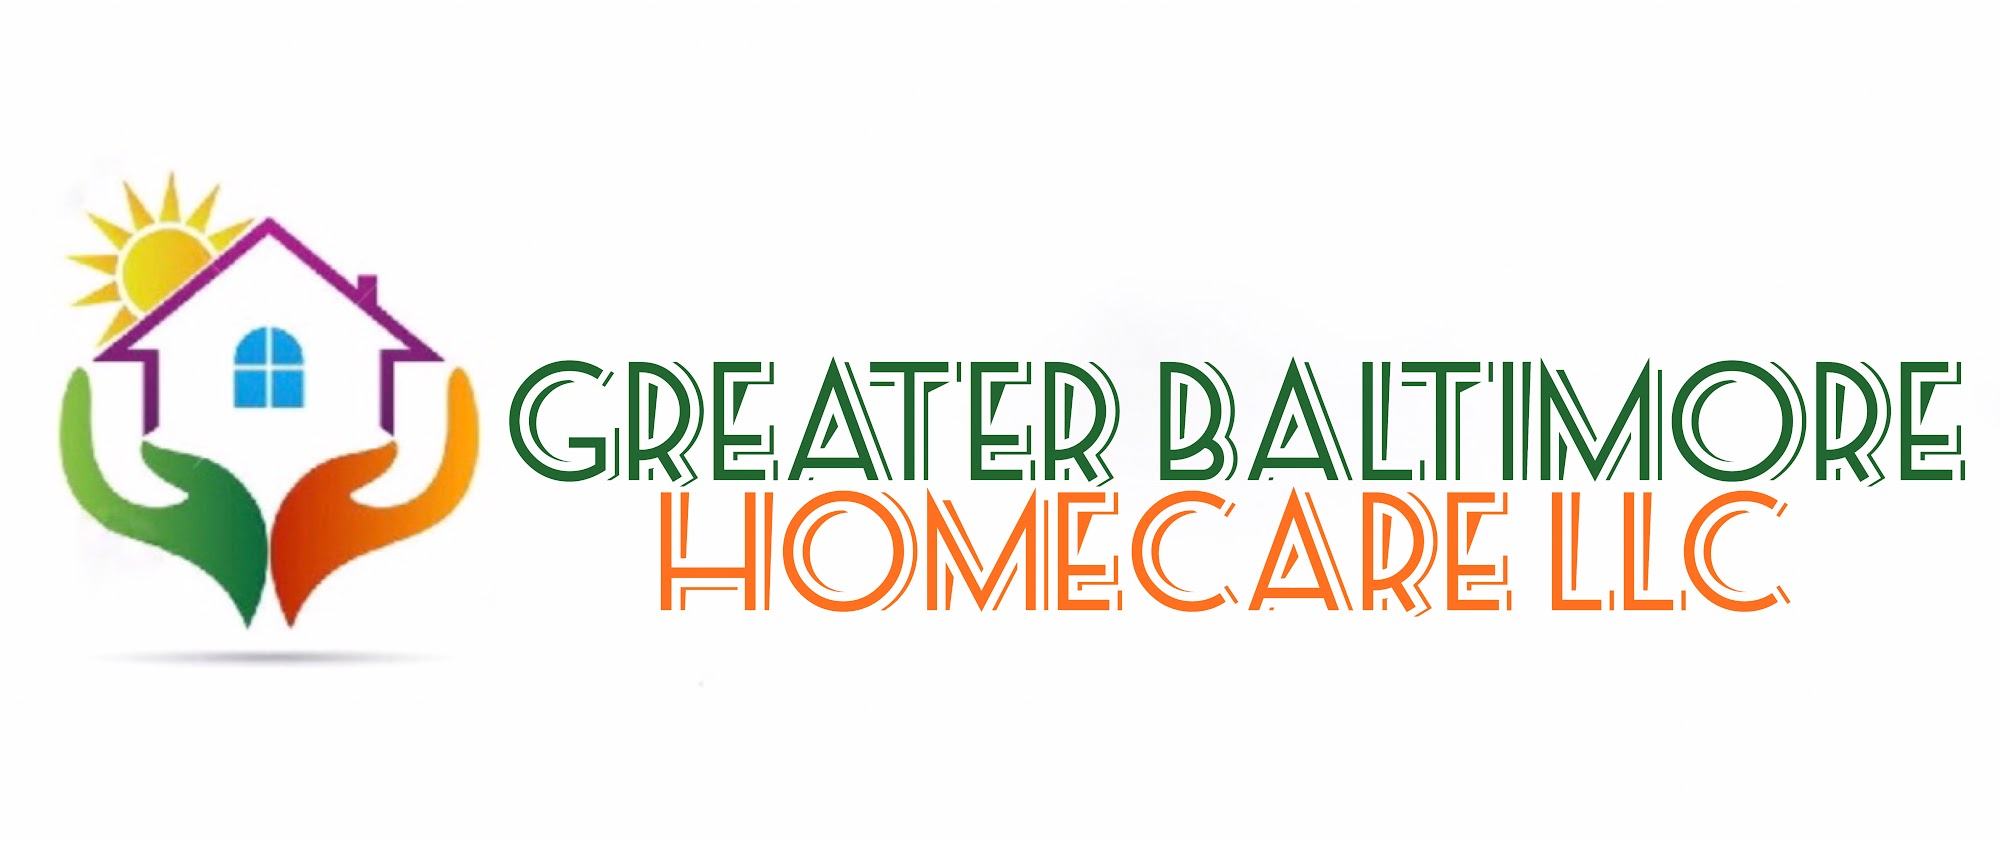 Greater Baltimore Homecare LLC